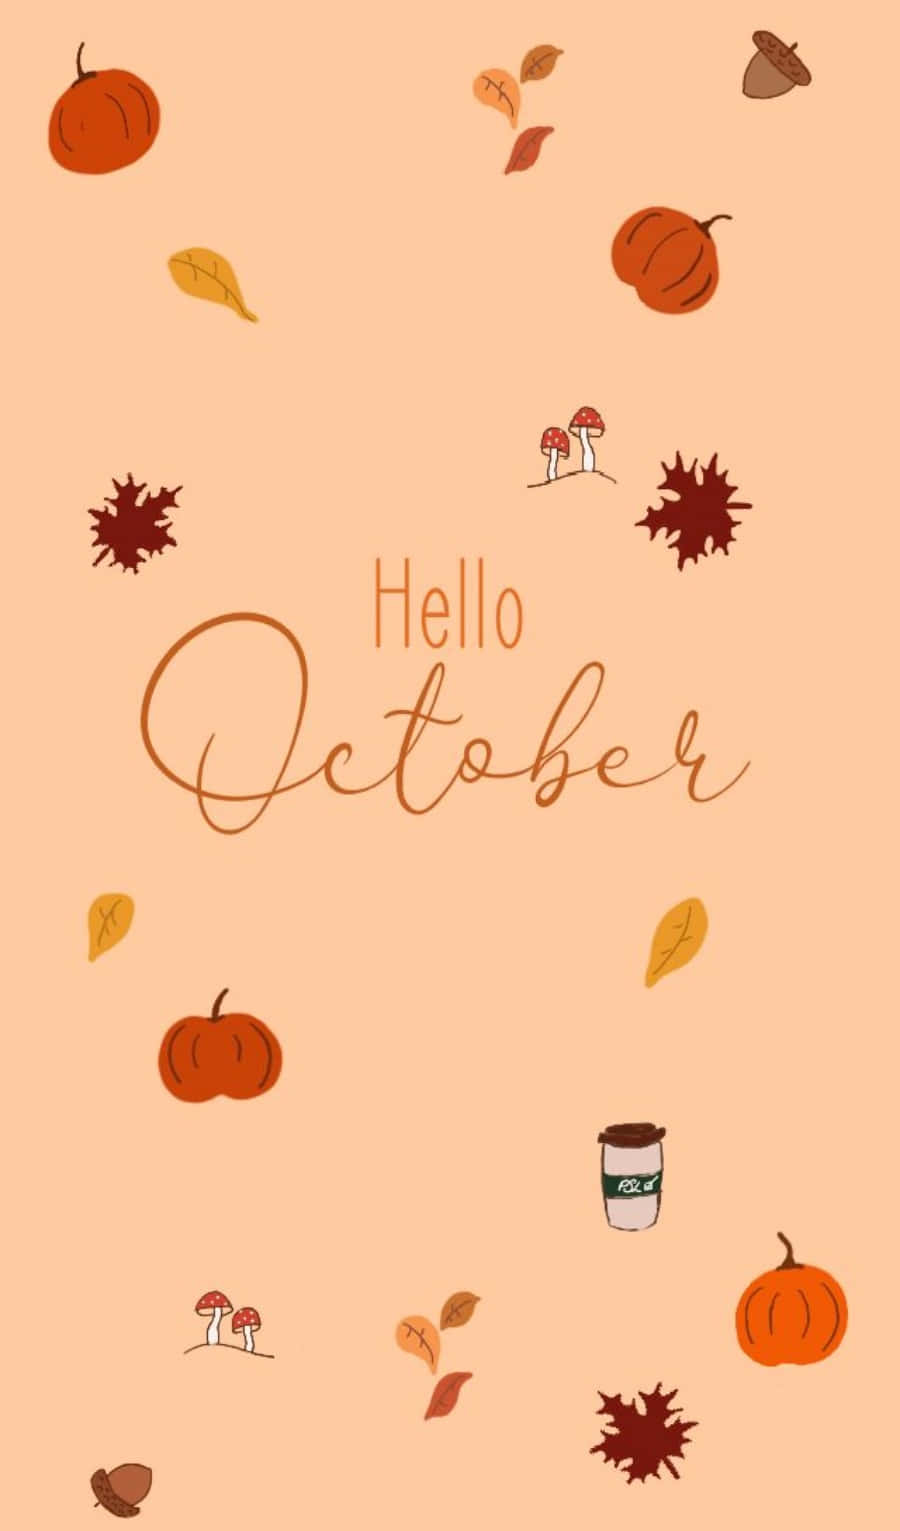 October Calendar Wallpaper  56 Best Desktop  Phone Backgrounds